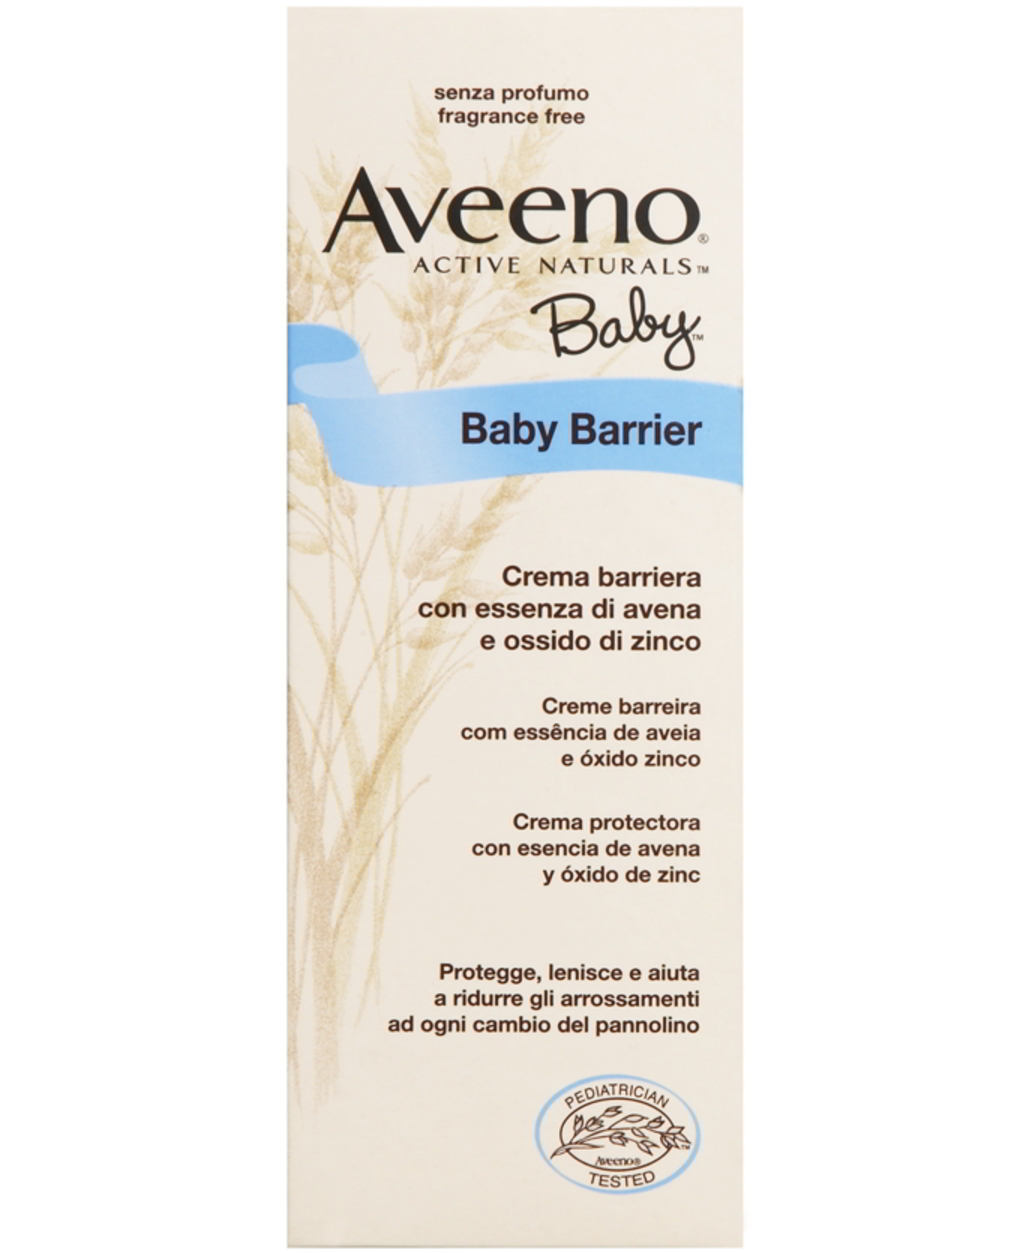 Baby barrier - Aveeno